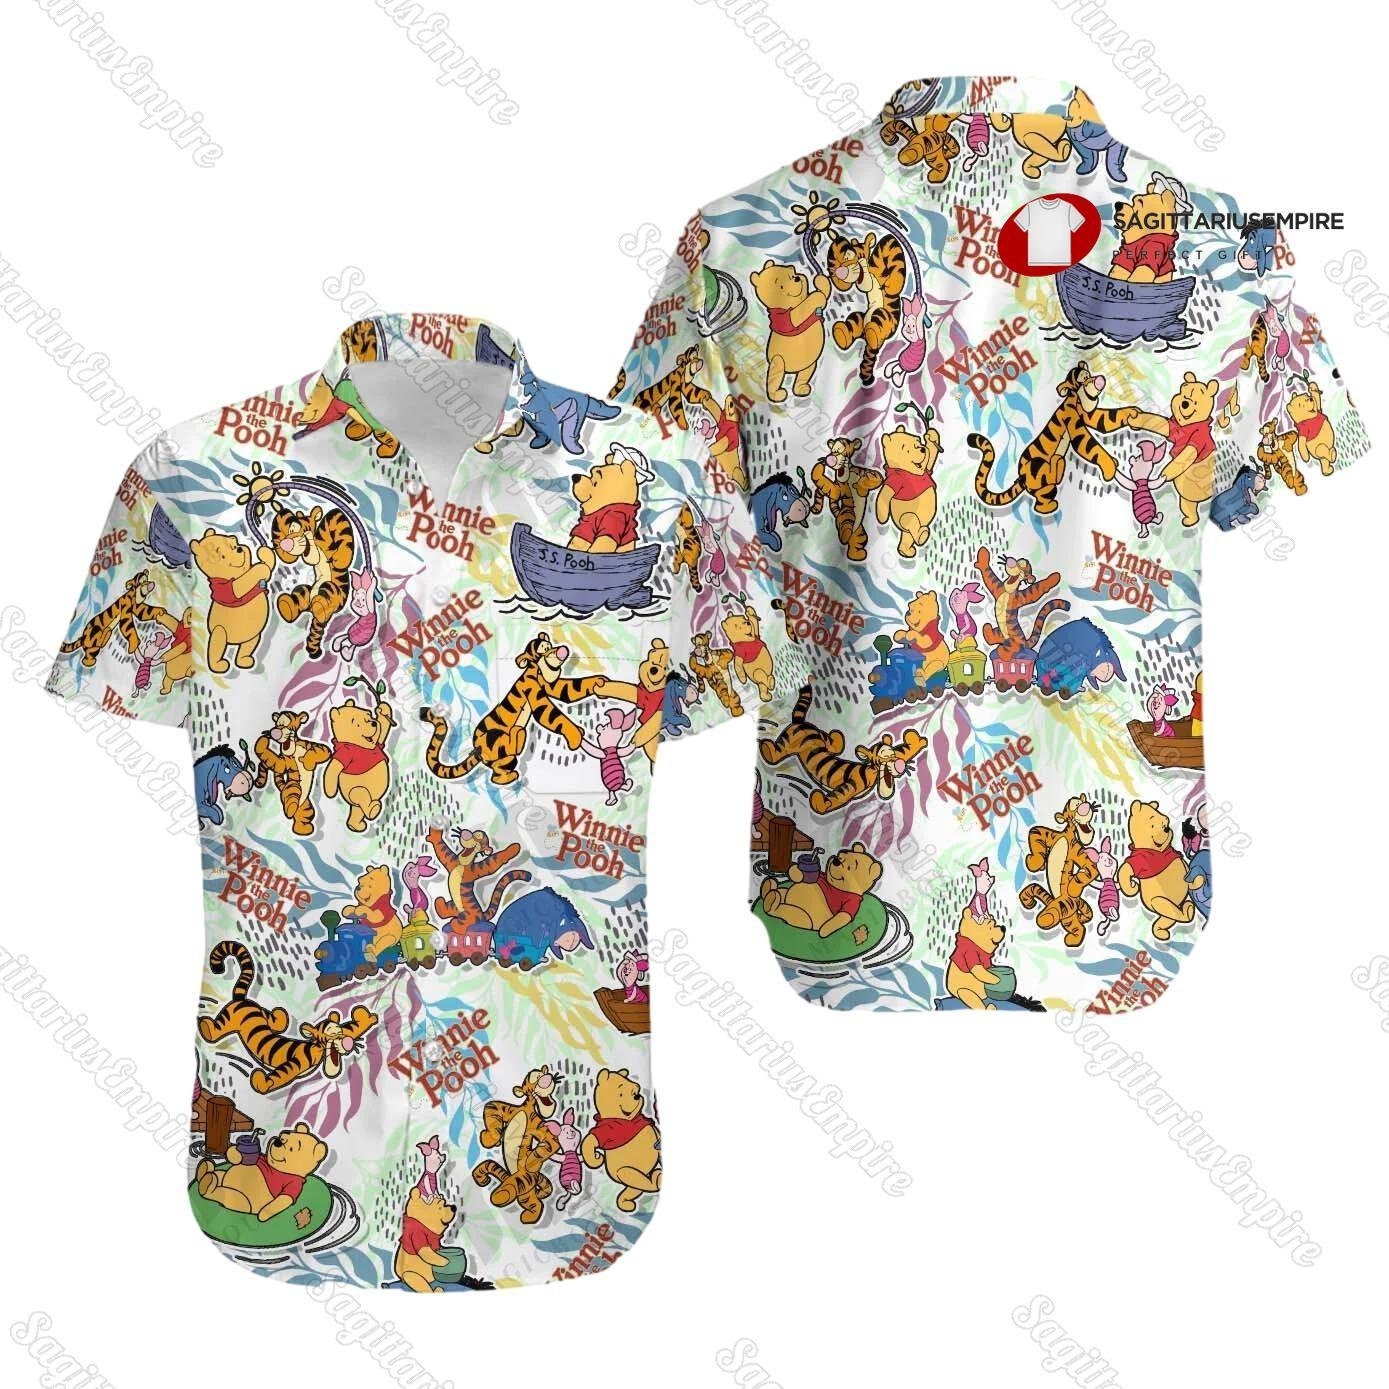 Winnie The Pooh Hawaiian Shirt And Beach Shorts